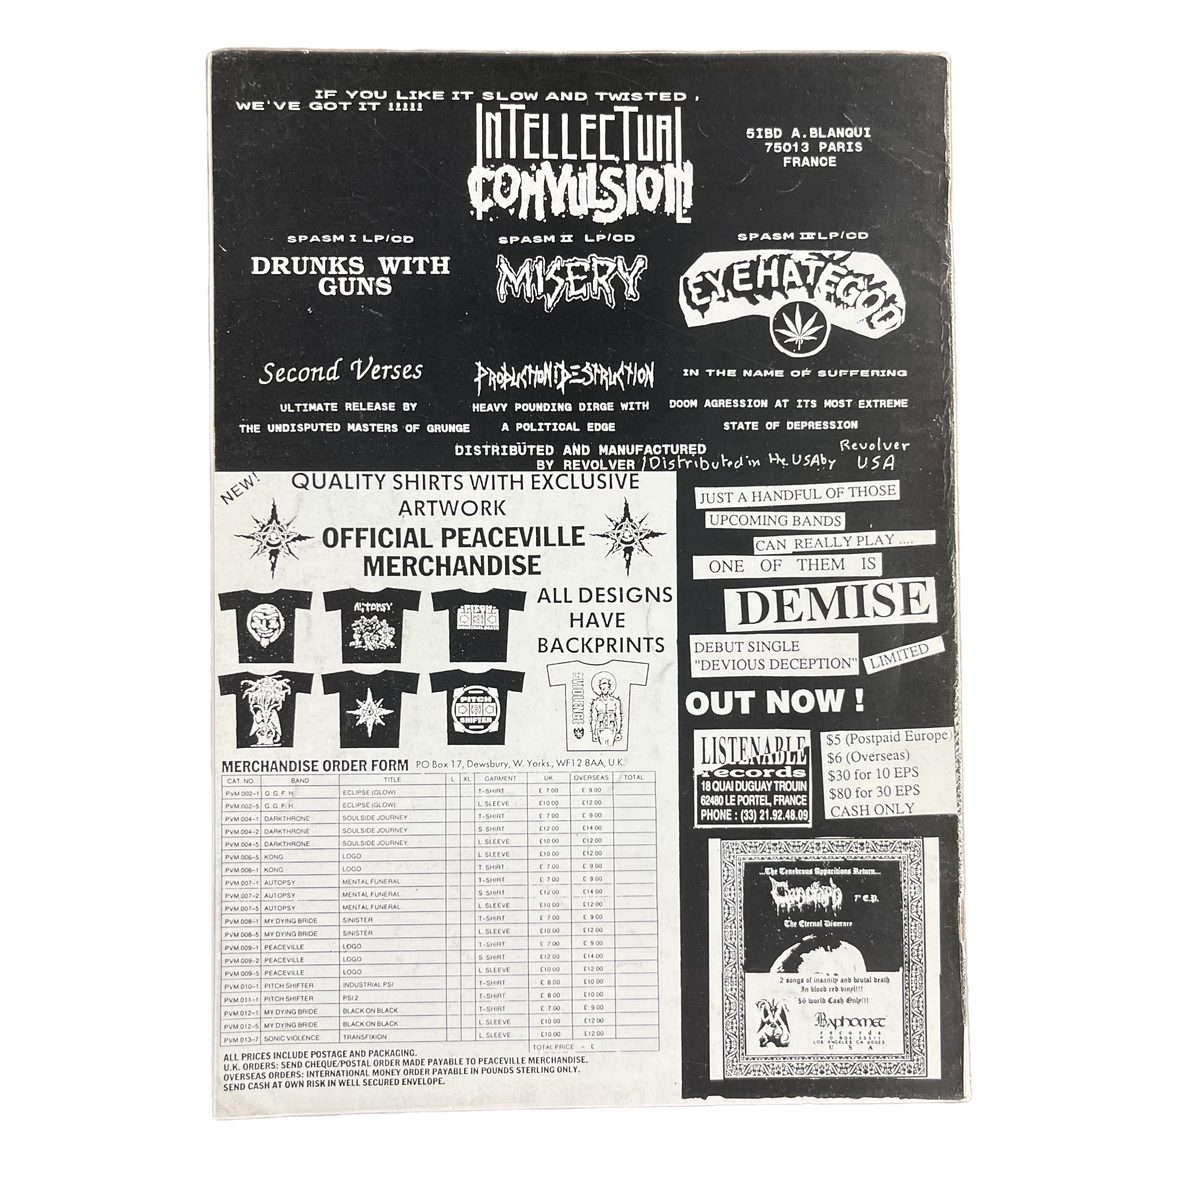 Vintage Peardrop Fanzine &quot;Death Metal&quot; Issue #4 + 1992-1993 Monthly Newsletters